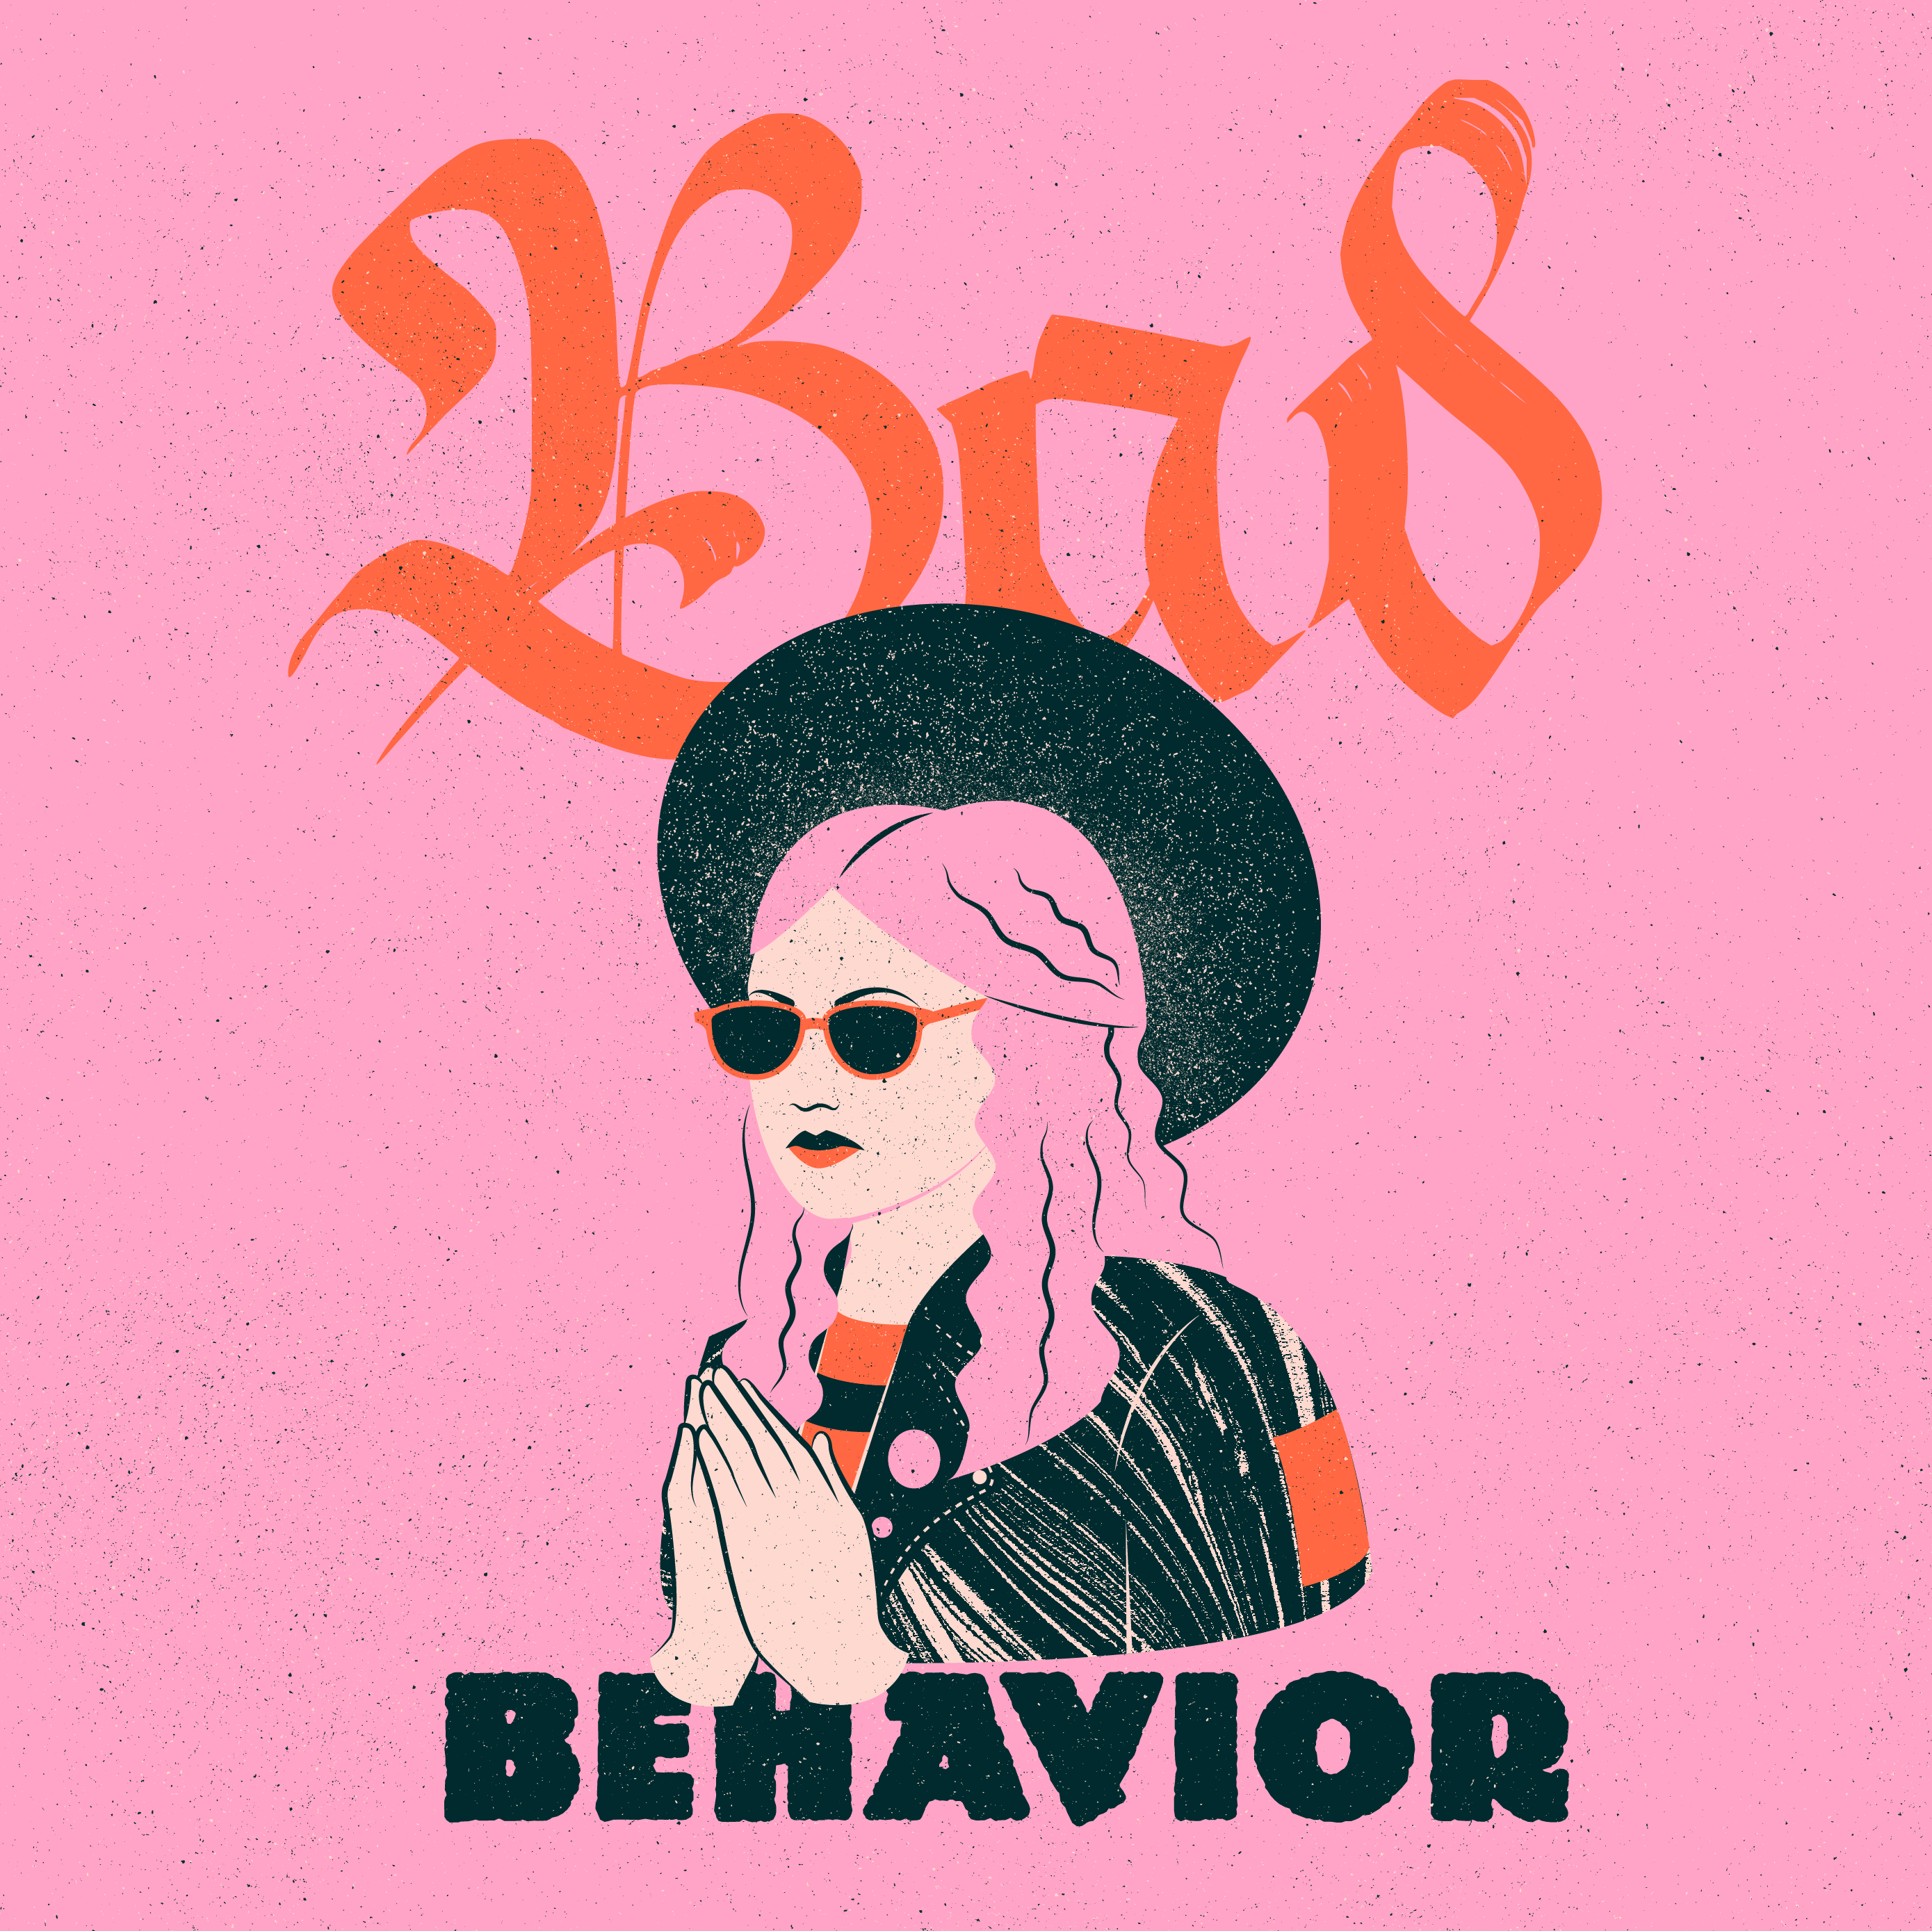 036 Bad Behavior Illustration - FA ROSALIND